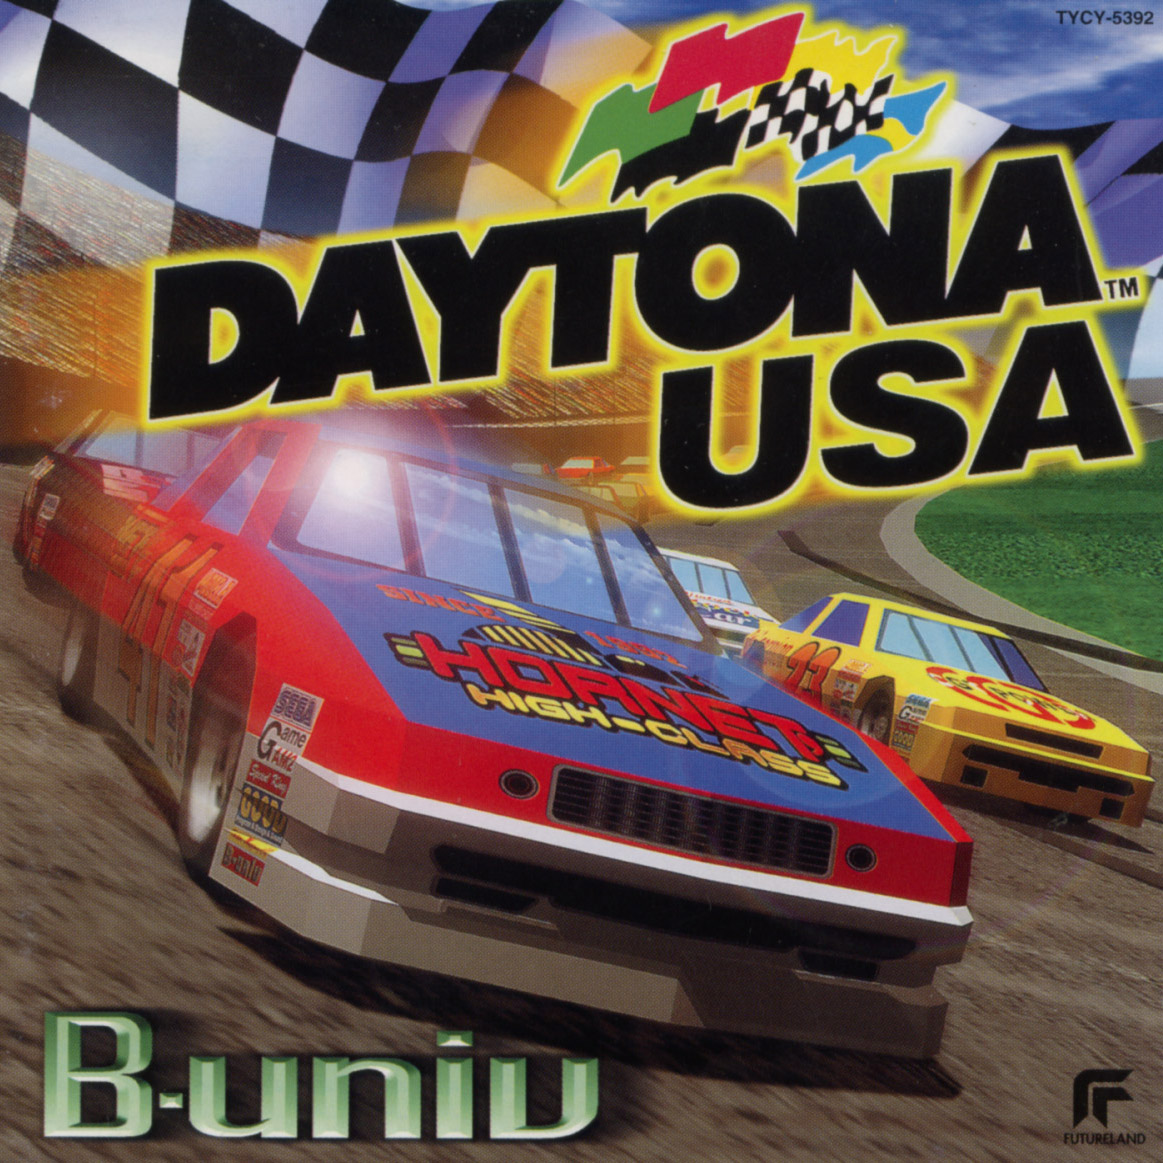 Daytona Usa Deluxe Pc Full Download